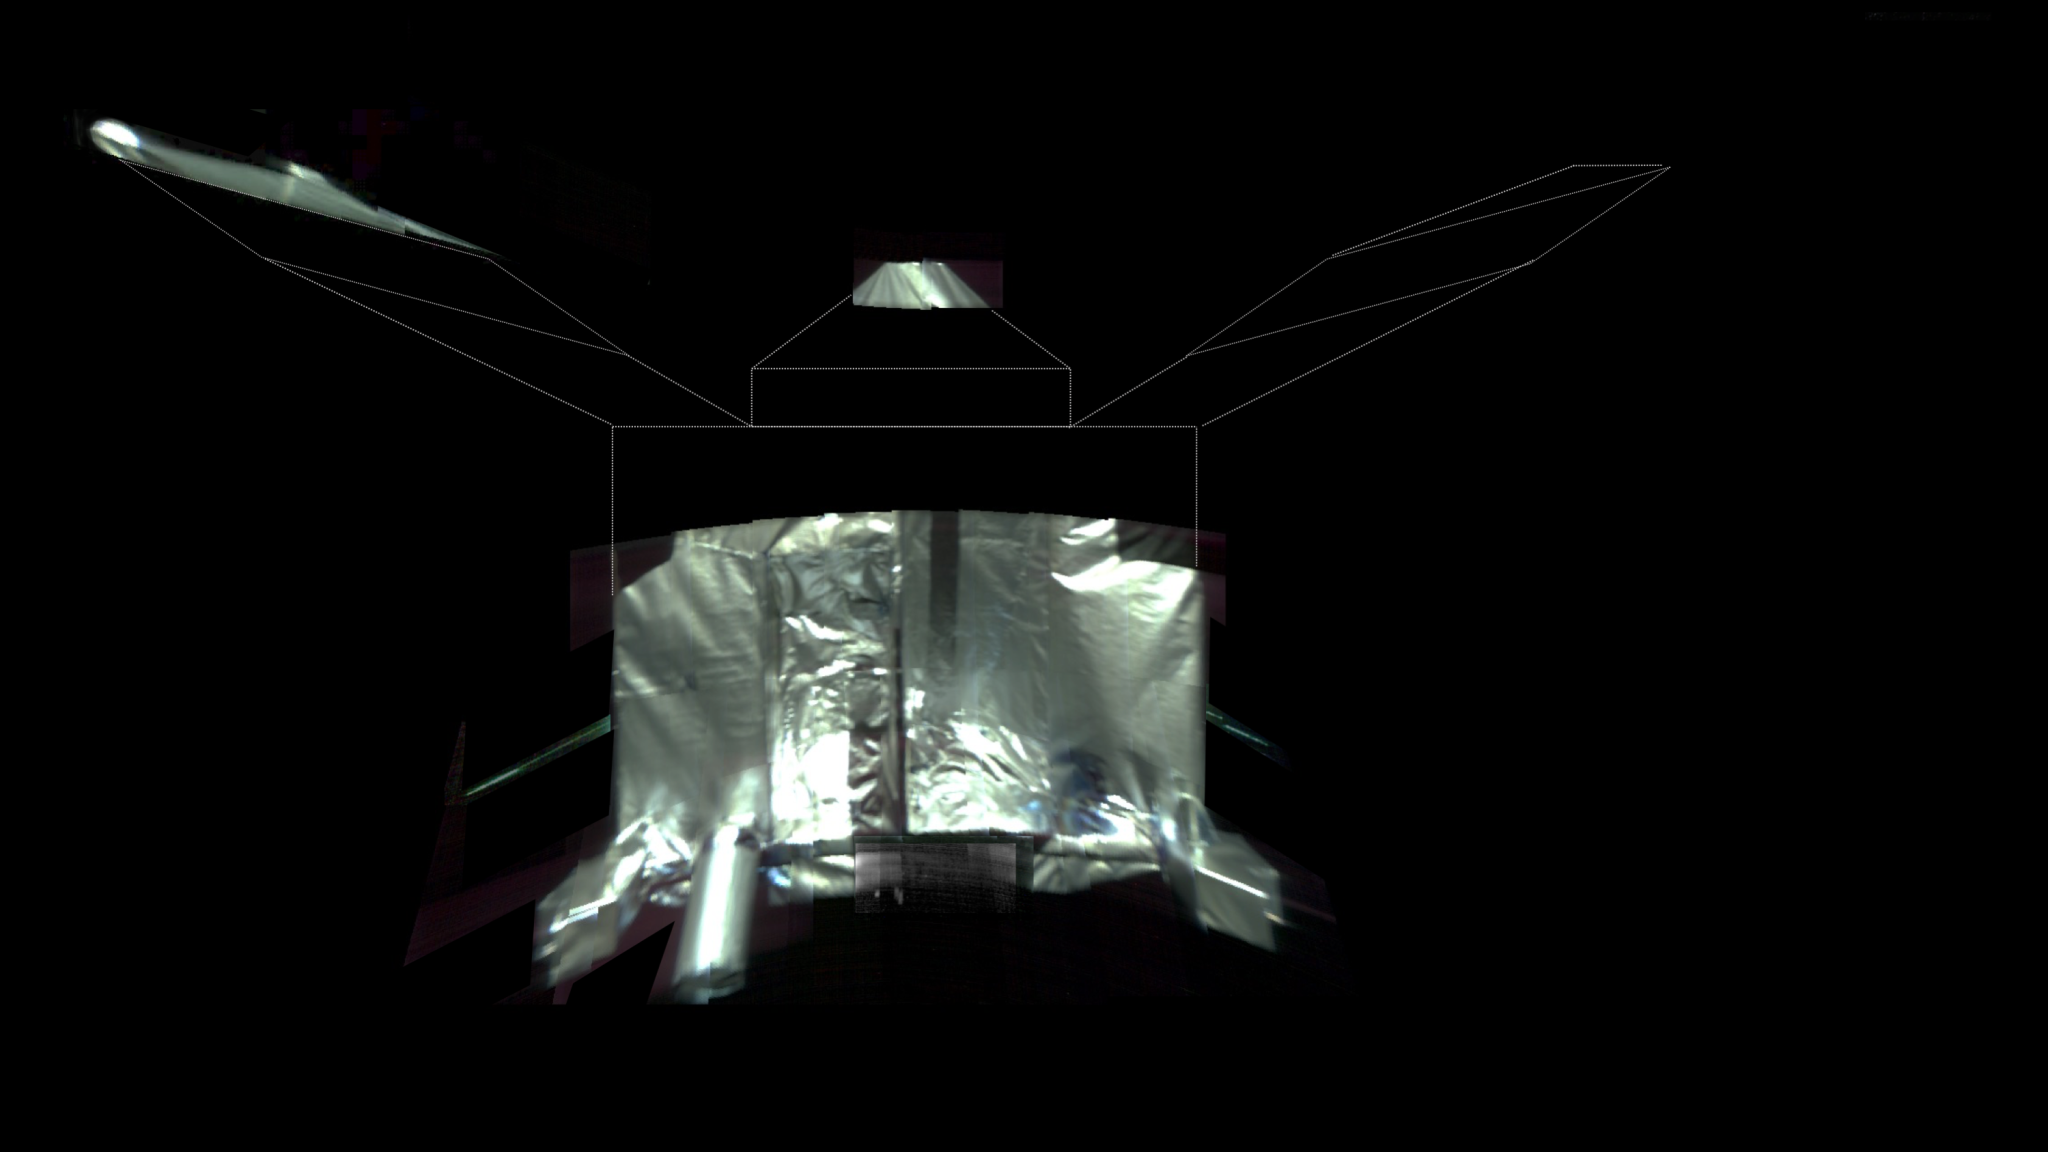 distorted photo composite of spacecraft